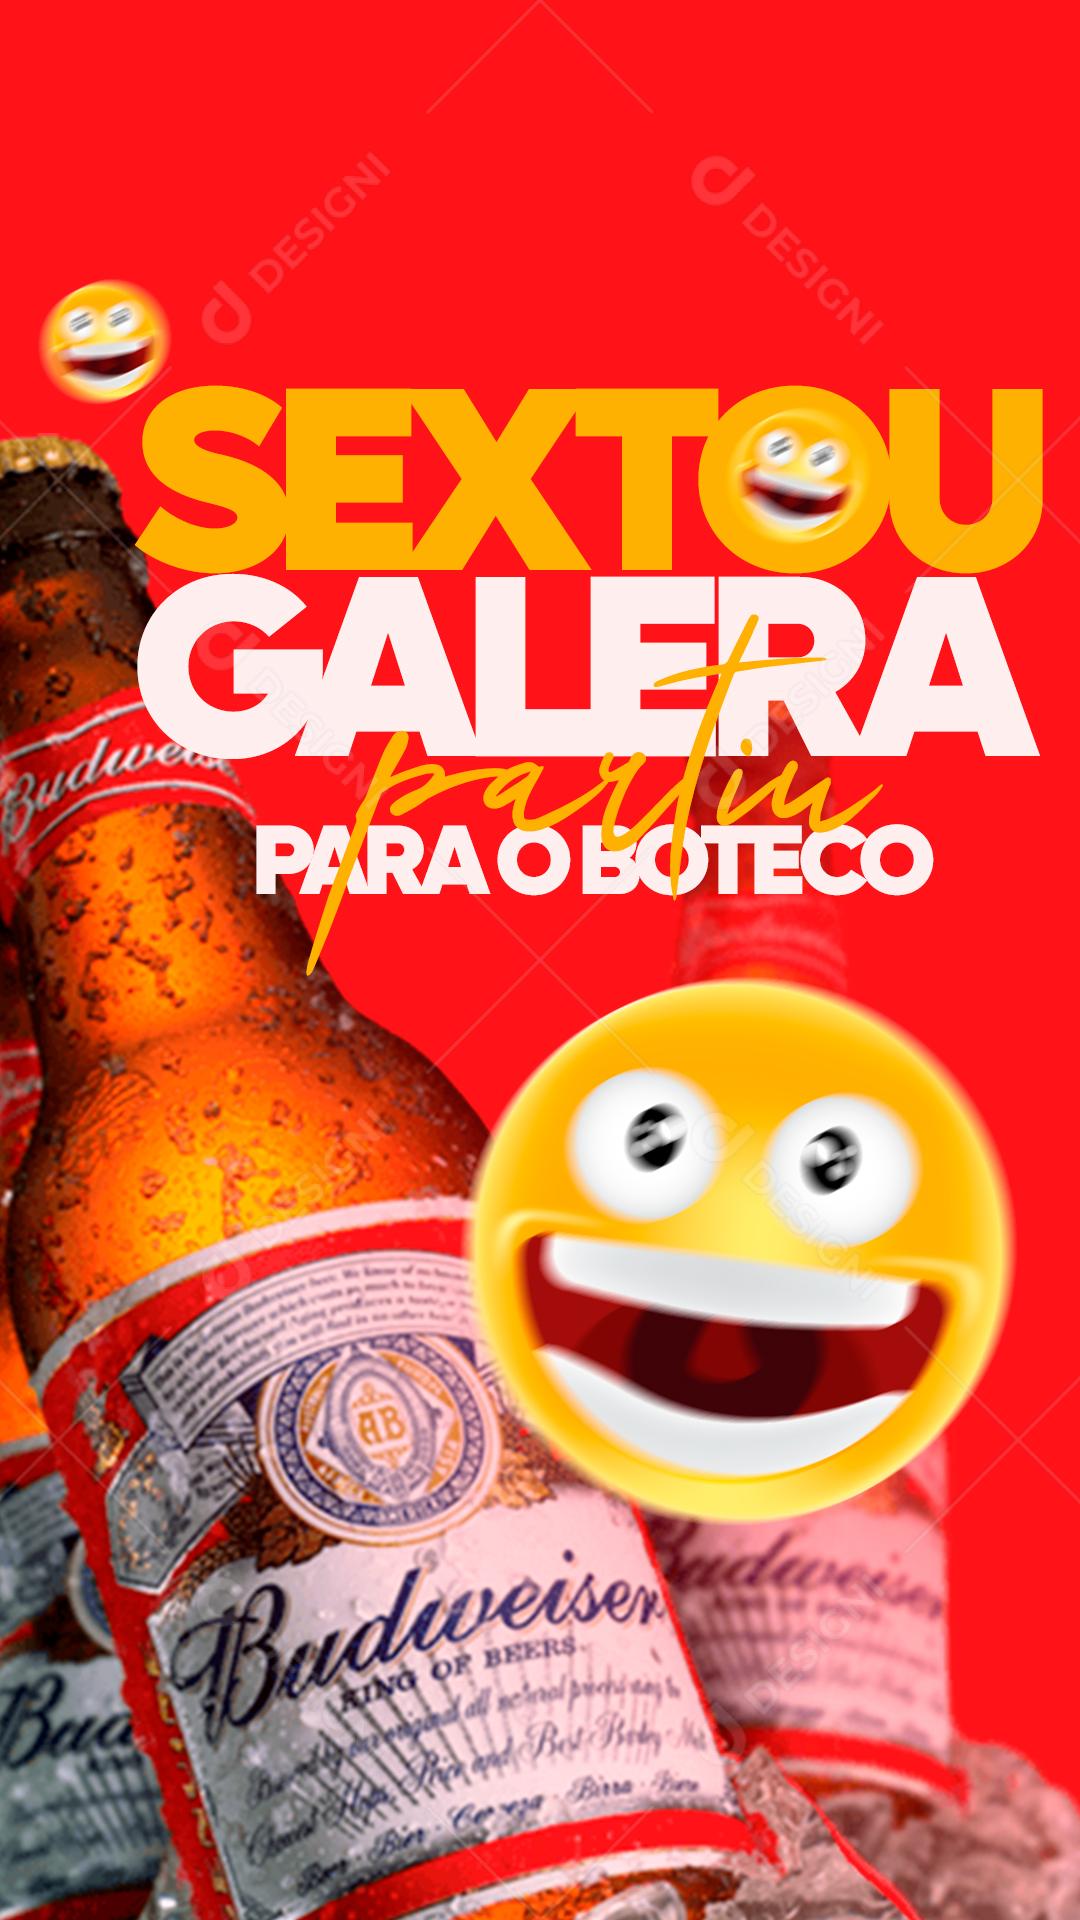 Social Media Story Distribuidora Budweiser Sextou Galera PSD Editável